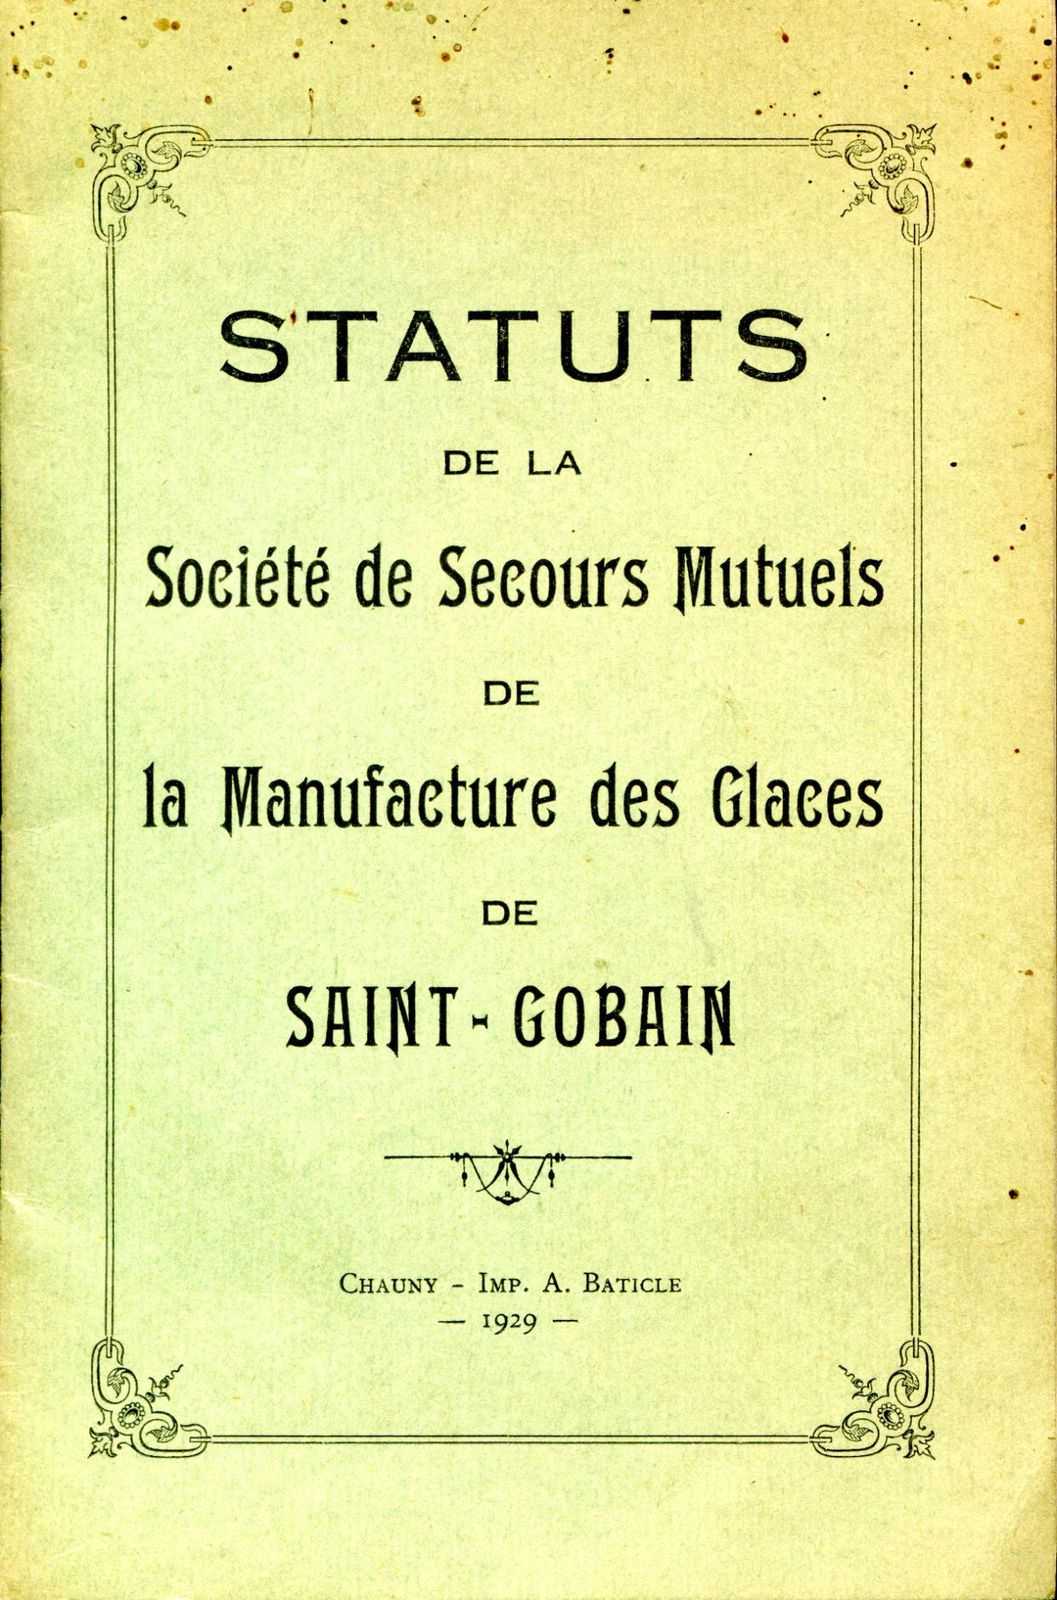 Glacerie de Saint-Gobain (Aisne), ( 01 )